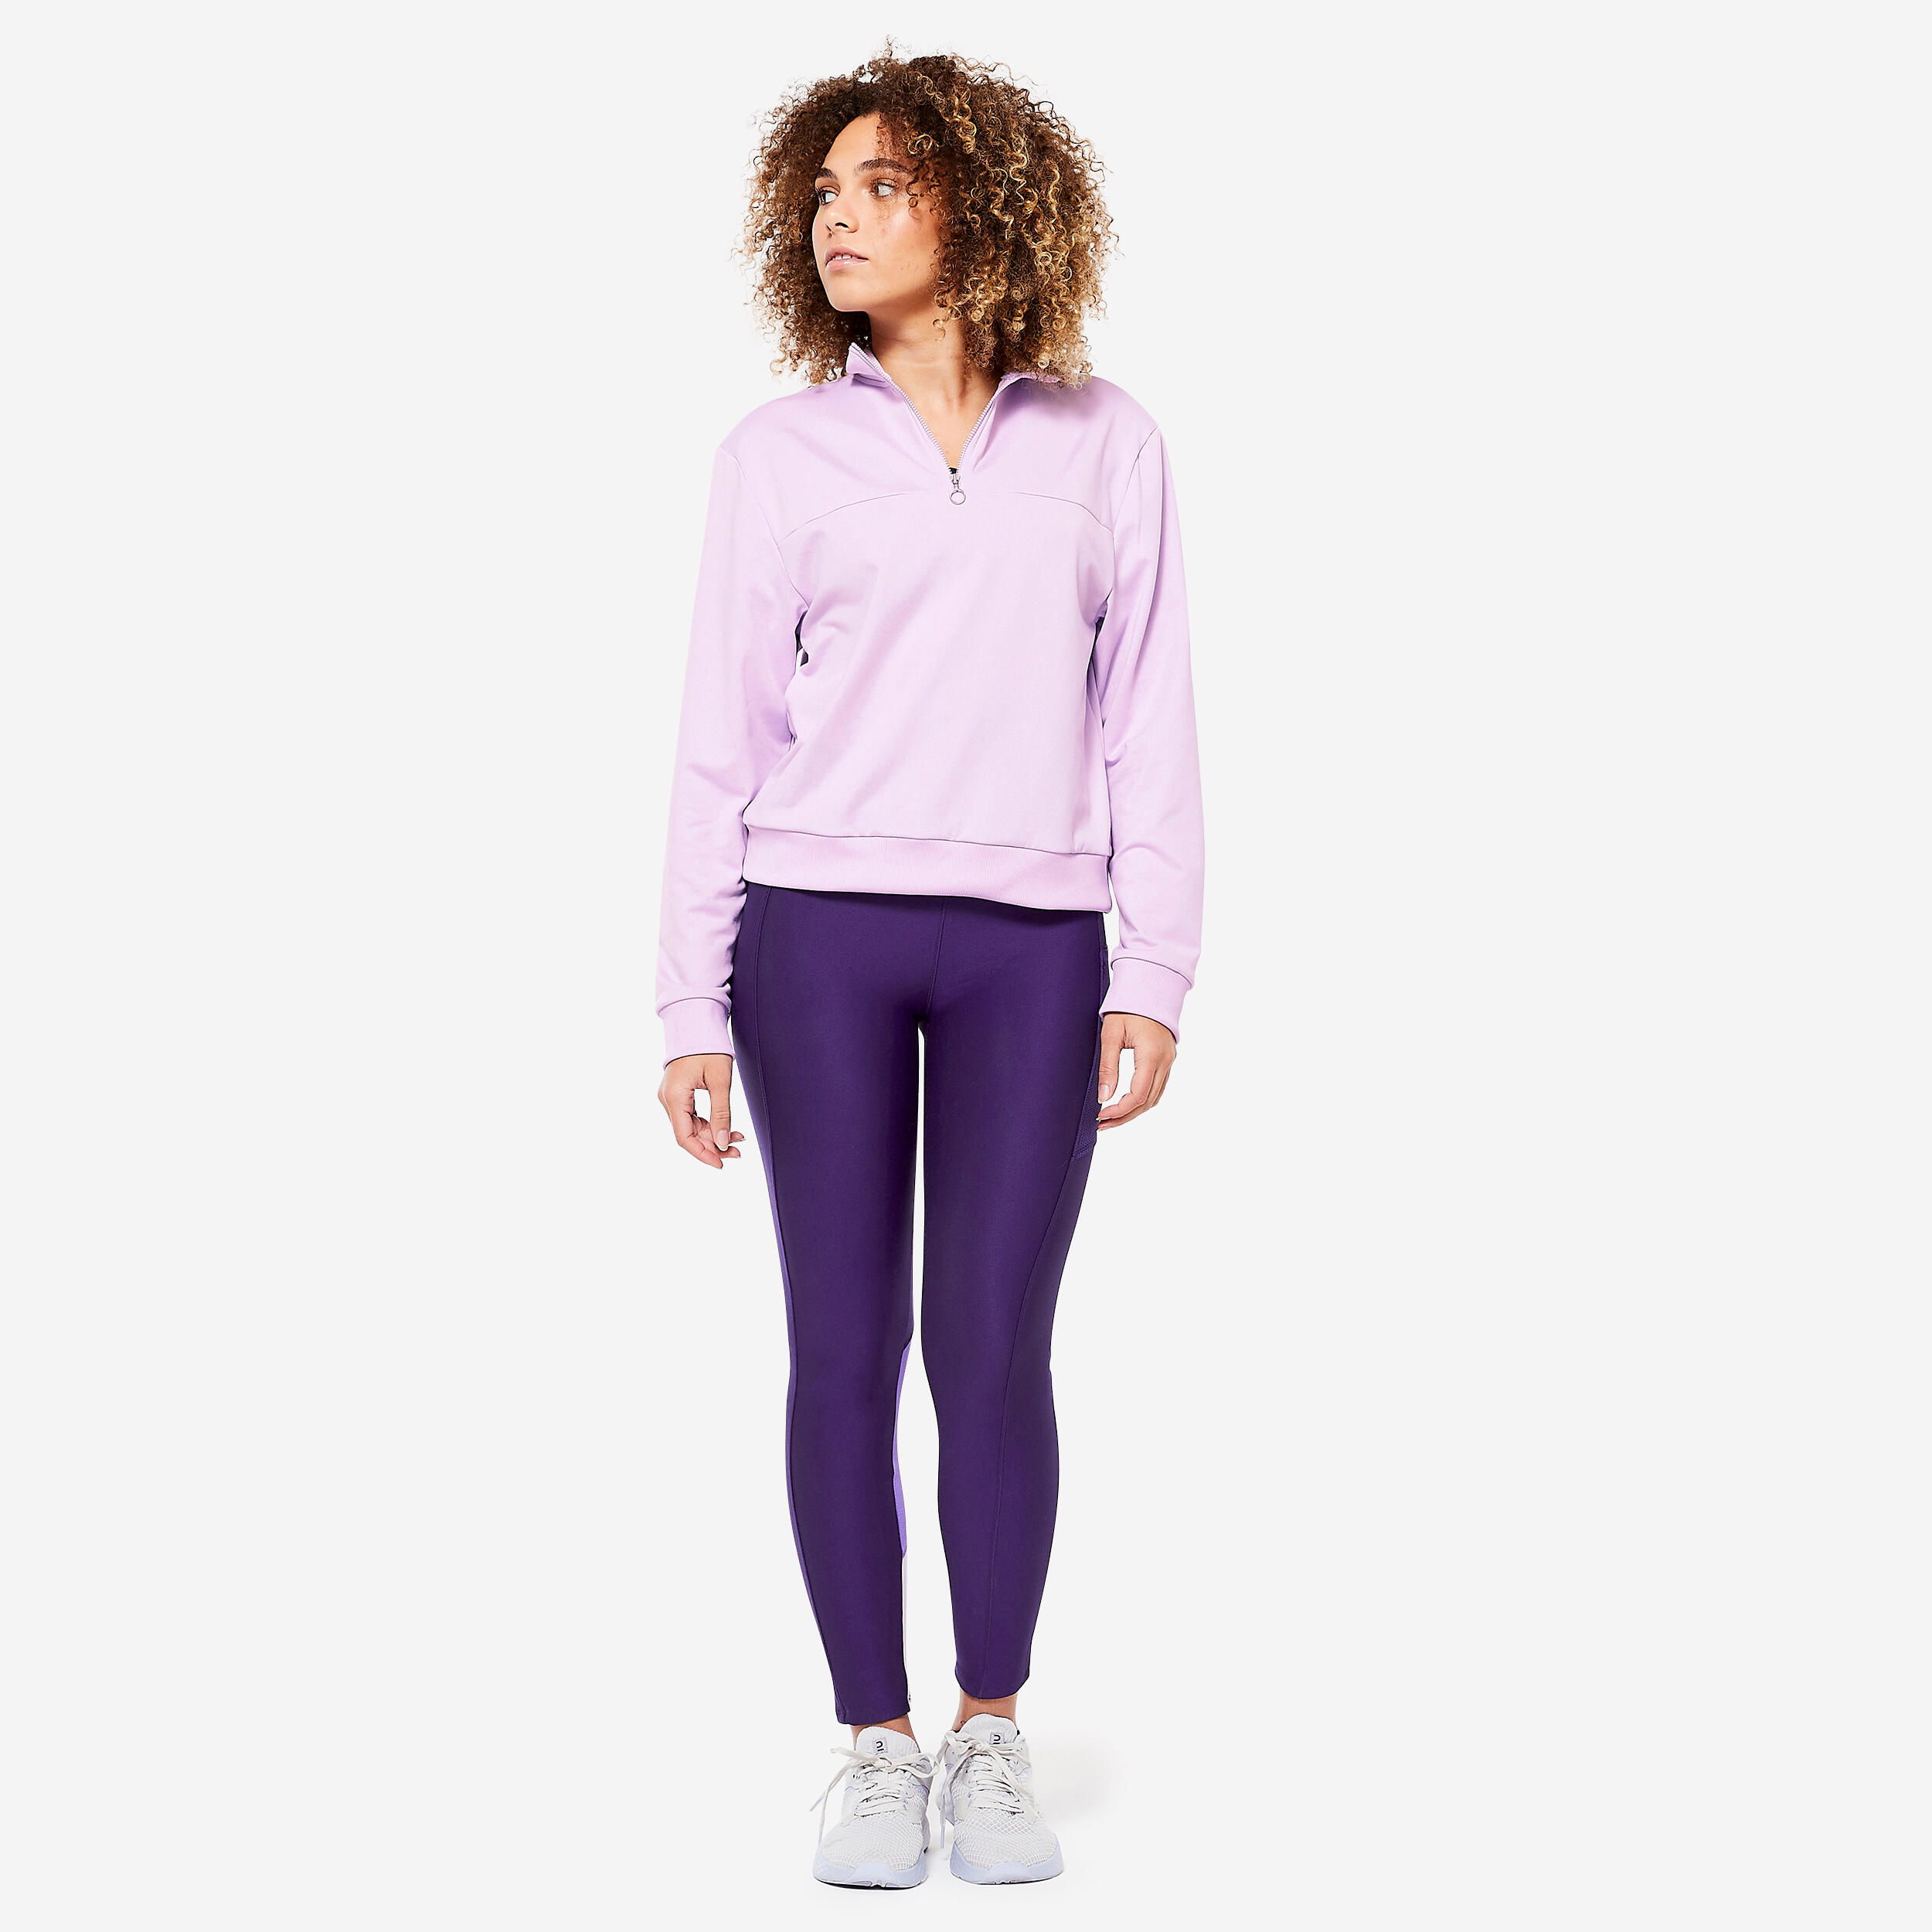 Women's Quarter-Zip Long-Sleeved Fitness Cardio Sweatshirt - Lilac 2/6